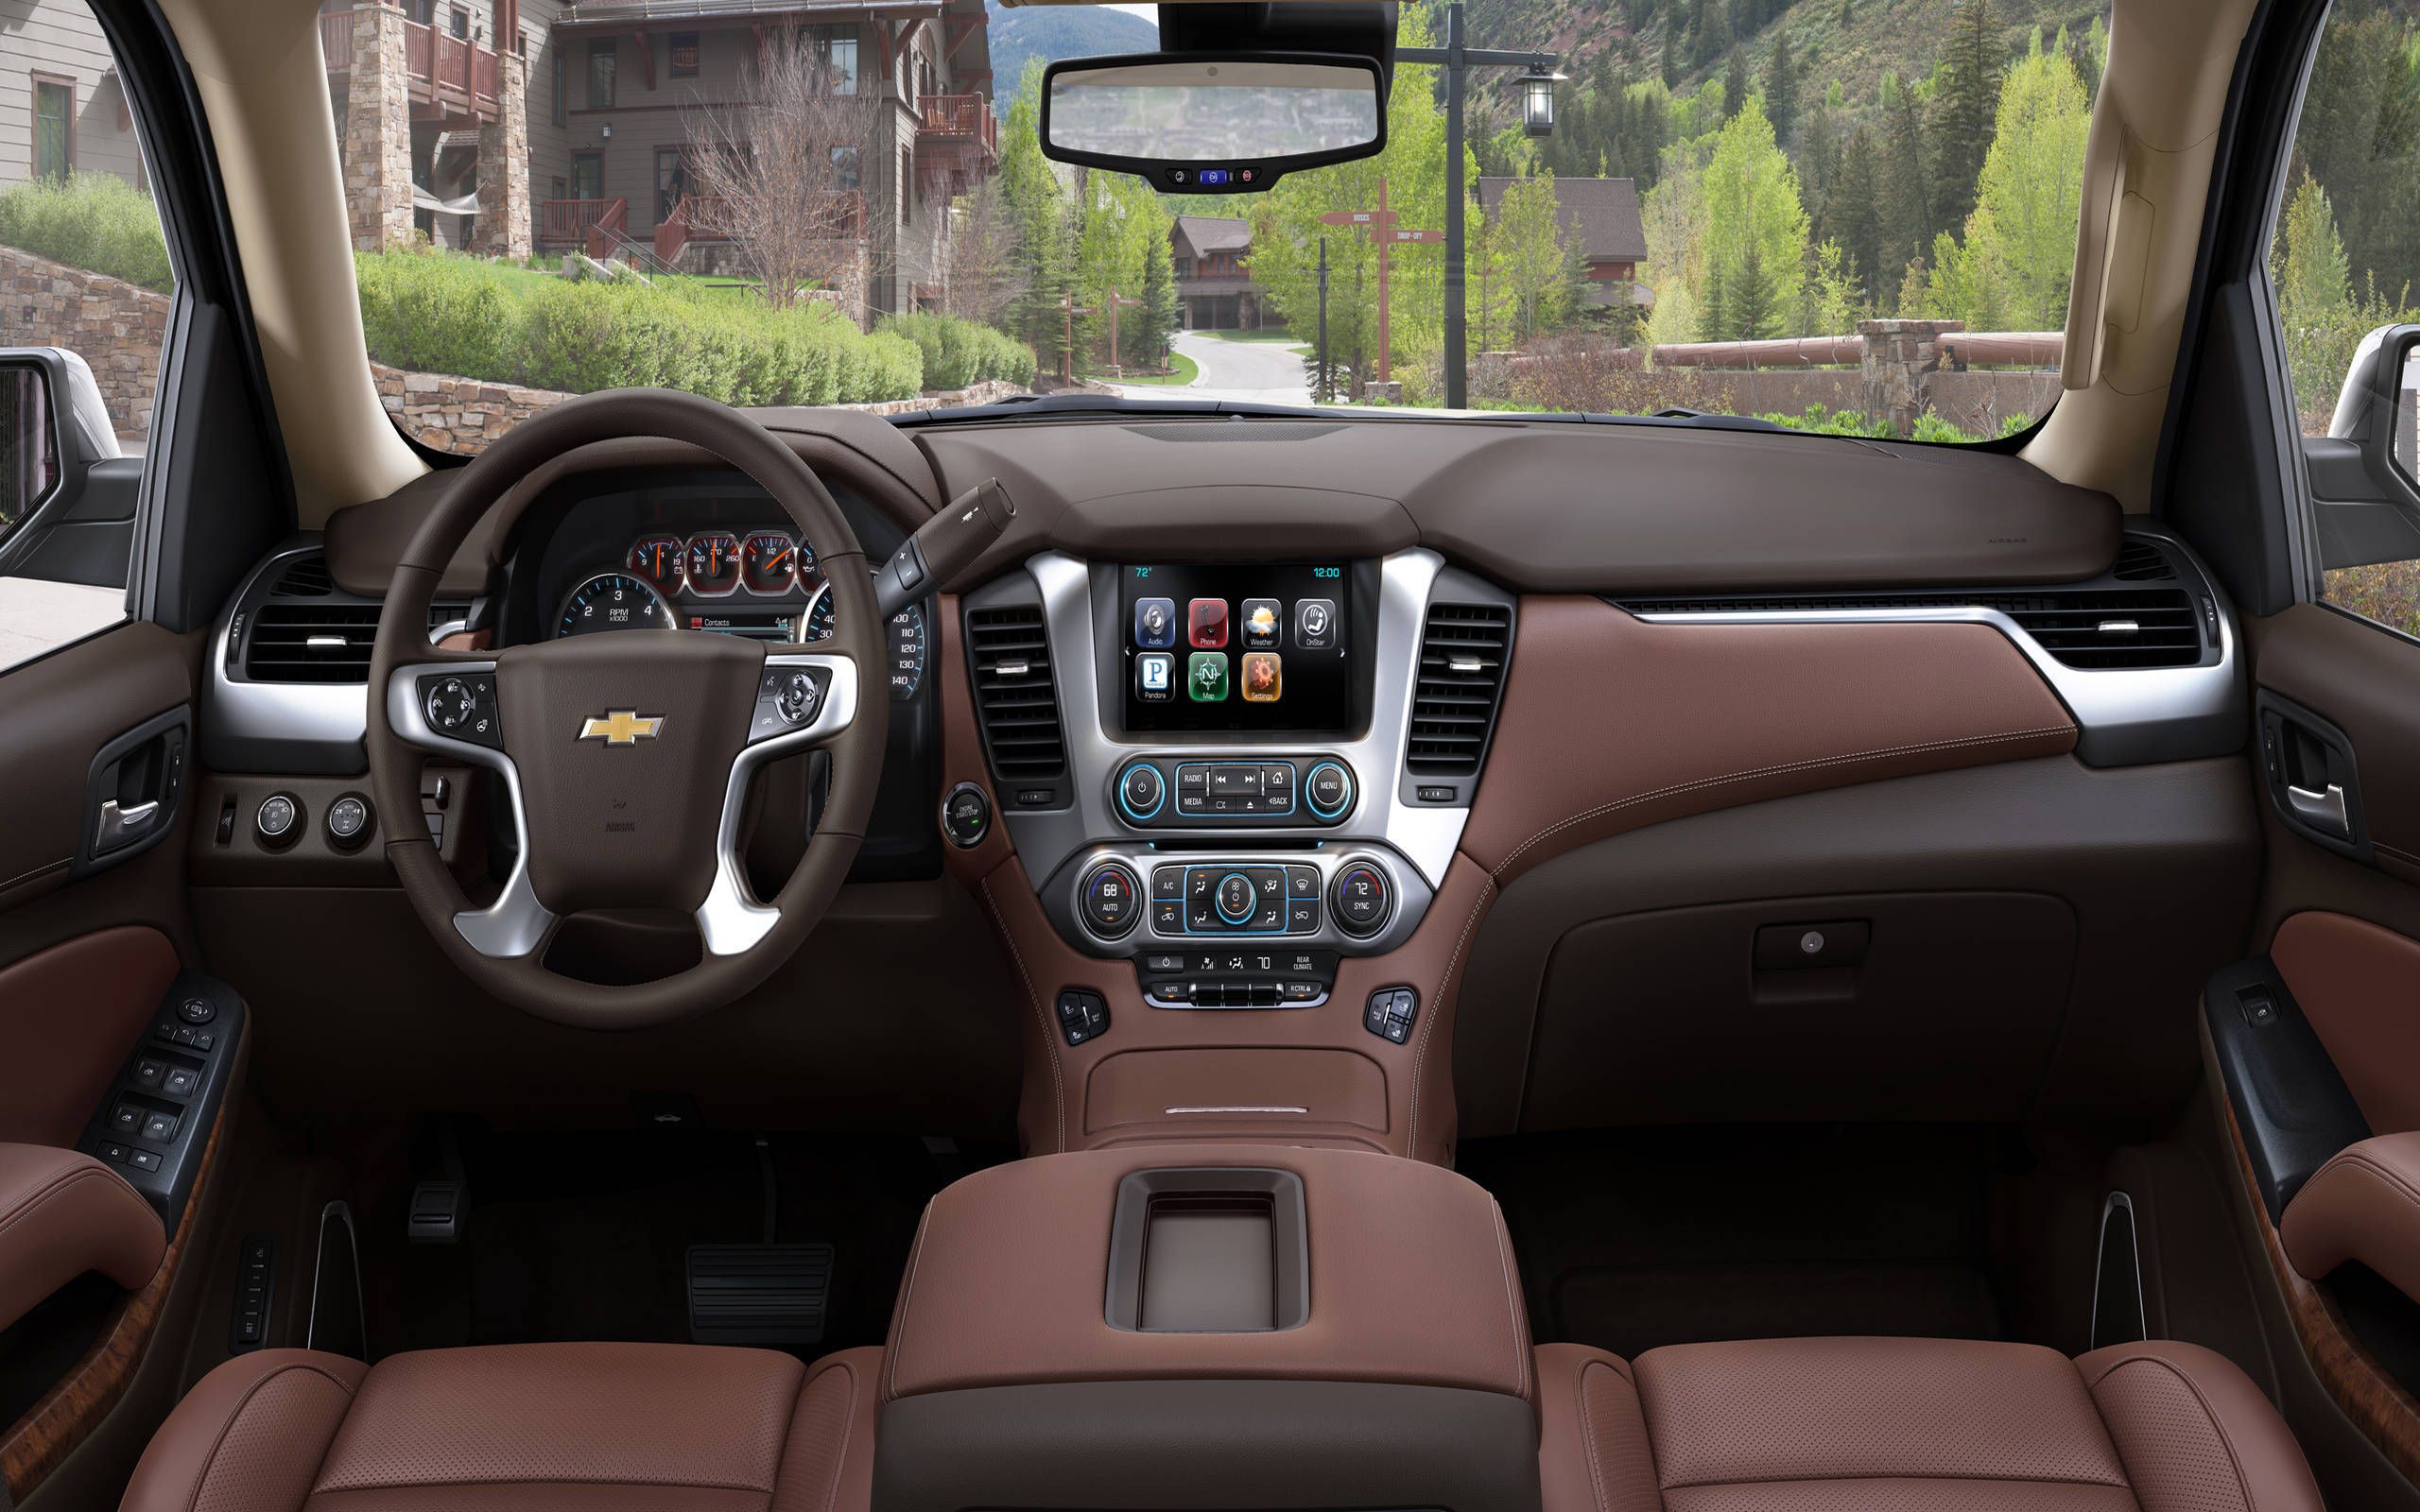 2016 Chevrolet Suburban LTZ review: A beast of an SUV